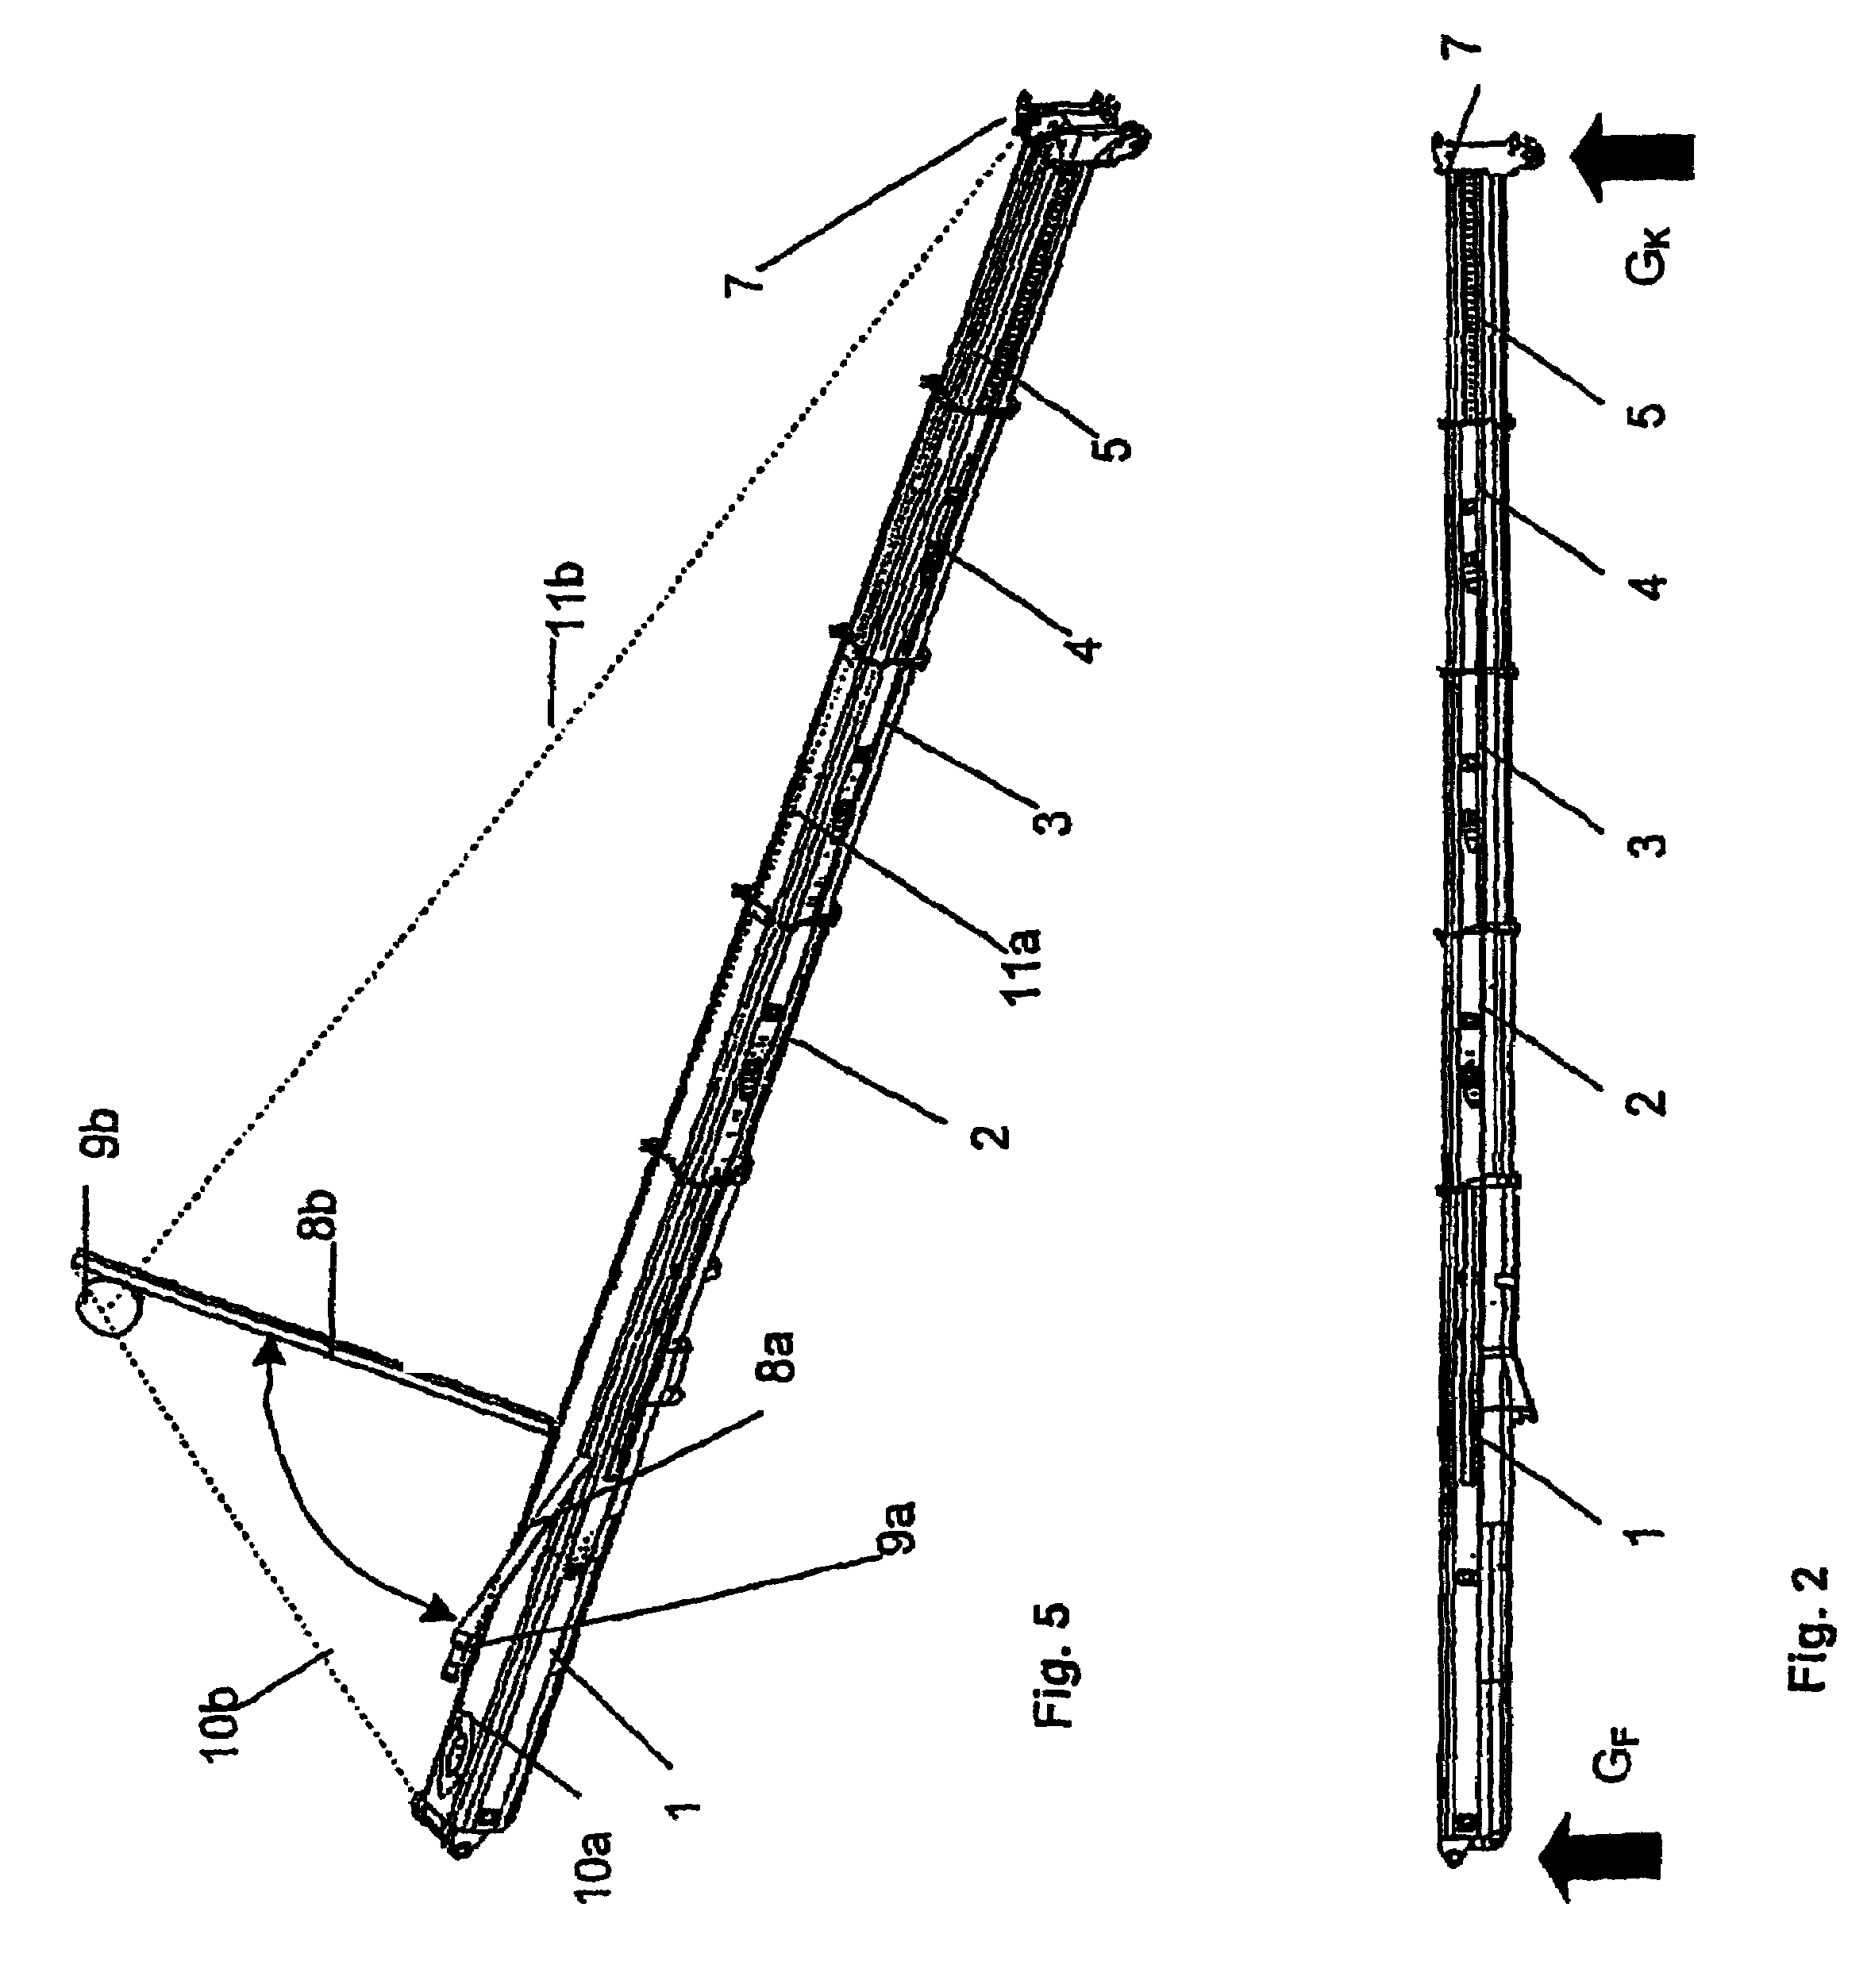 Mobile crane with a telescopic main boom